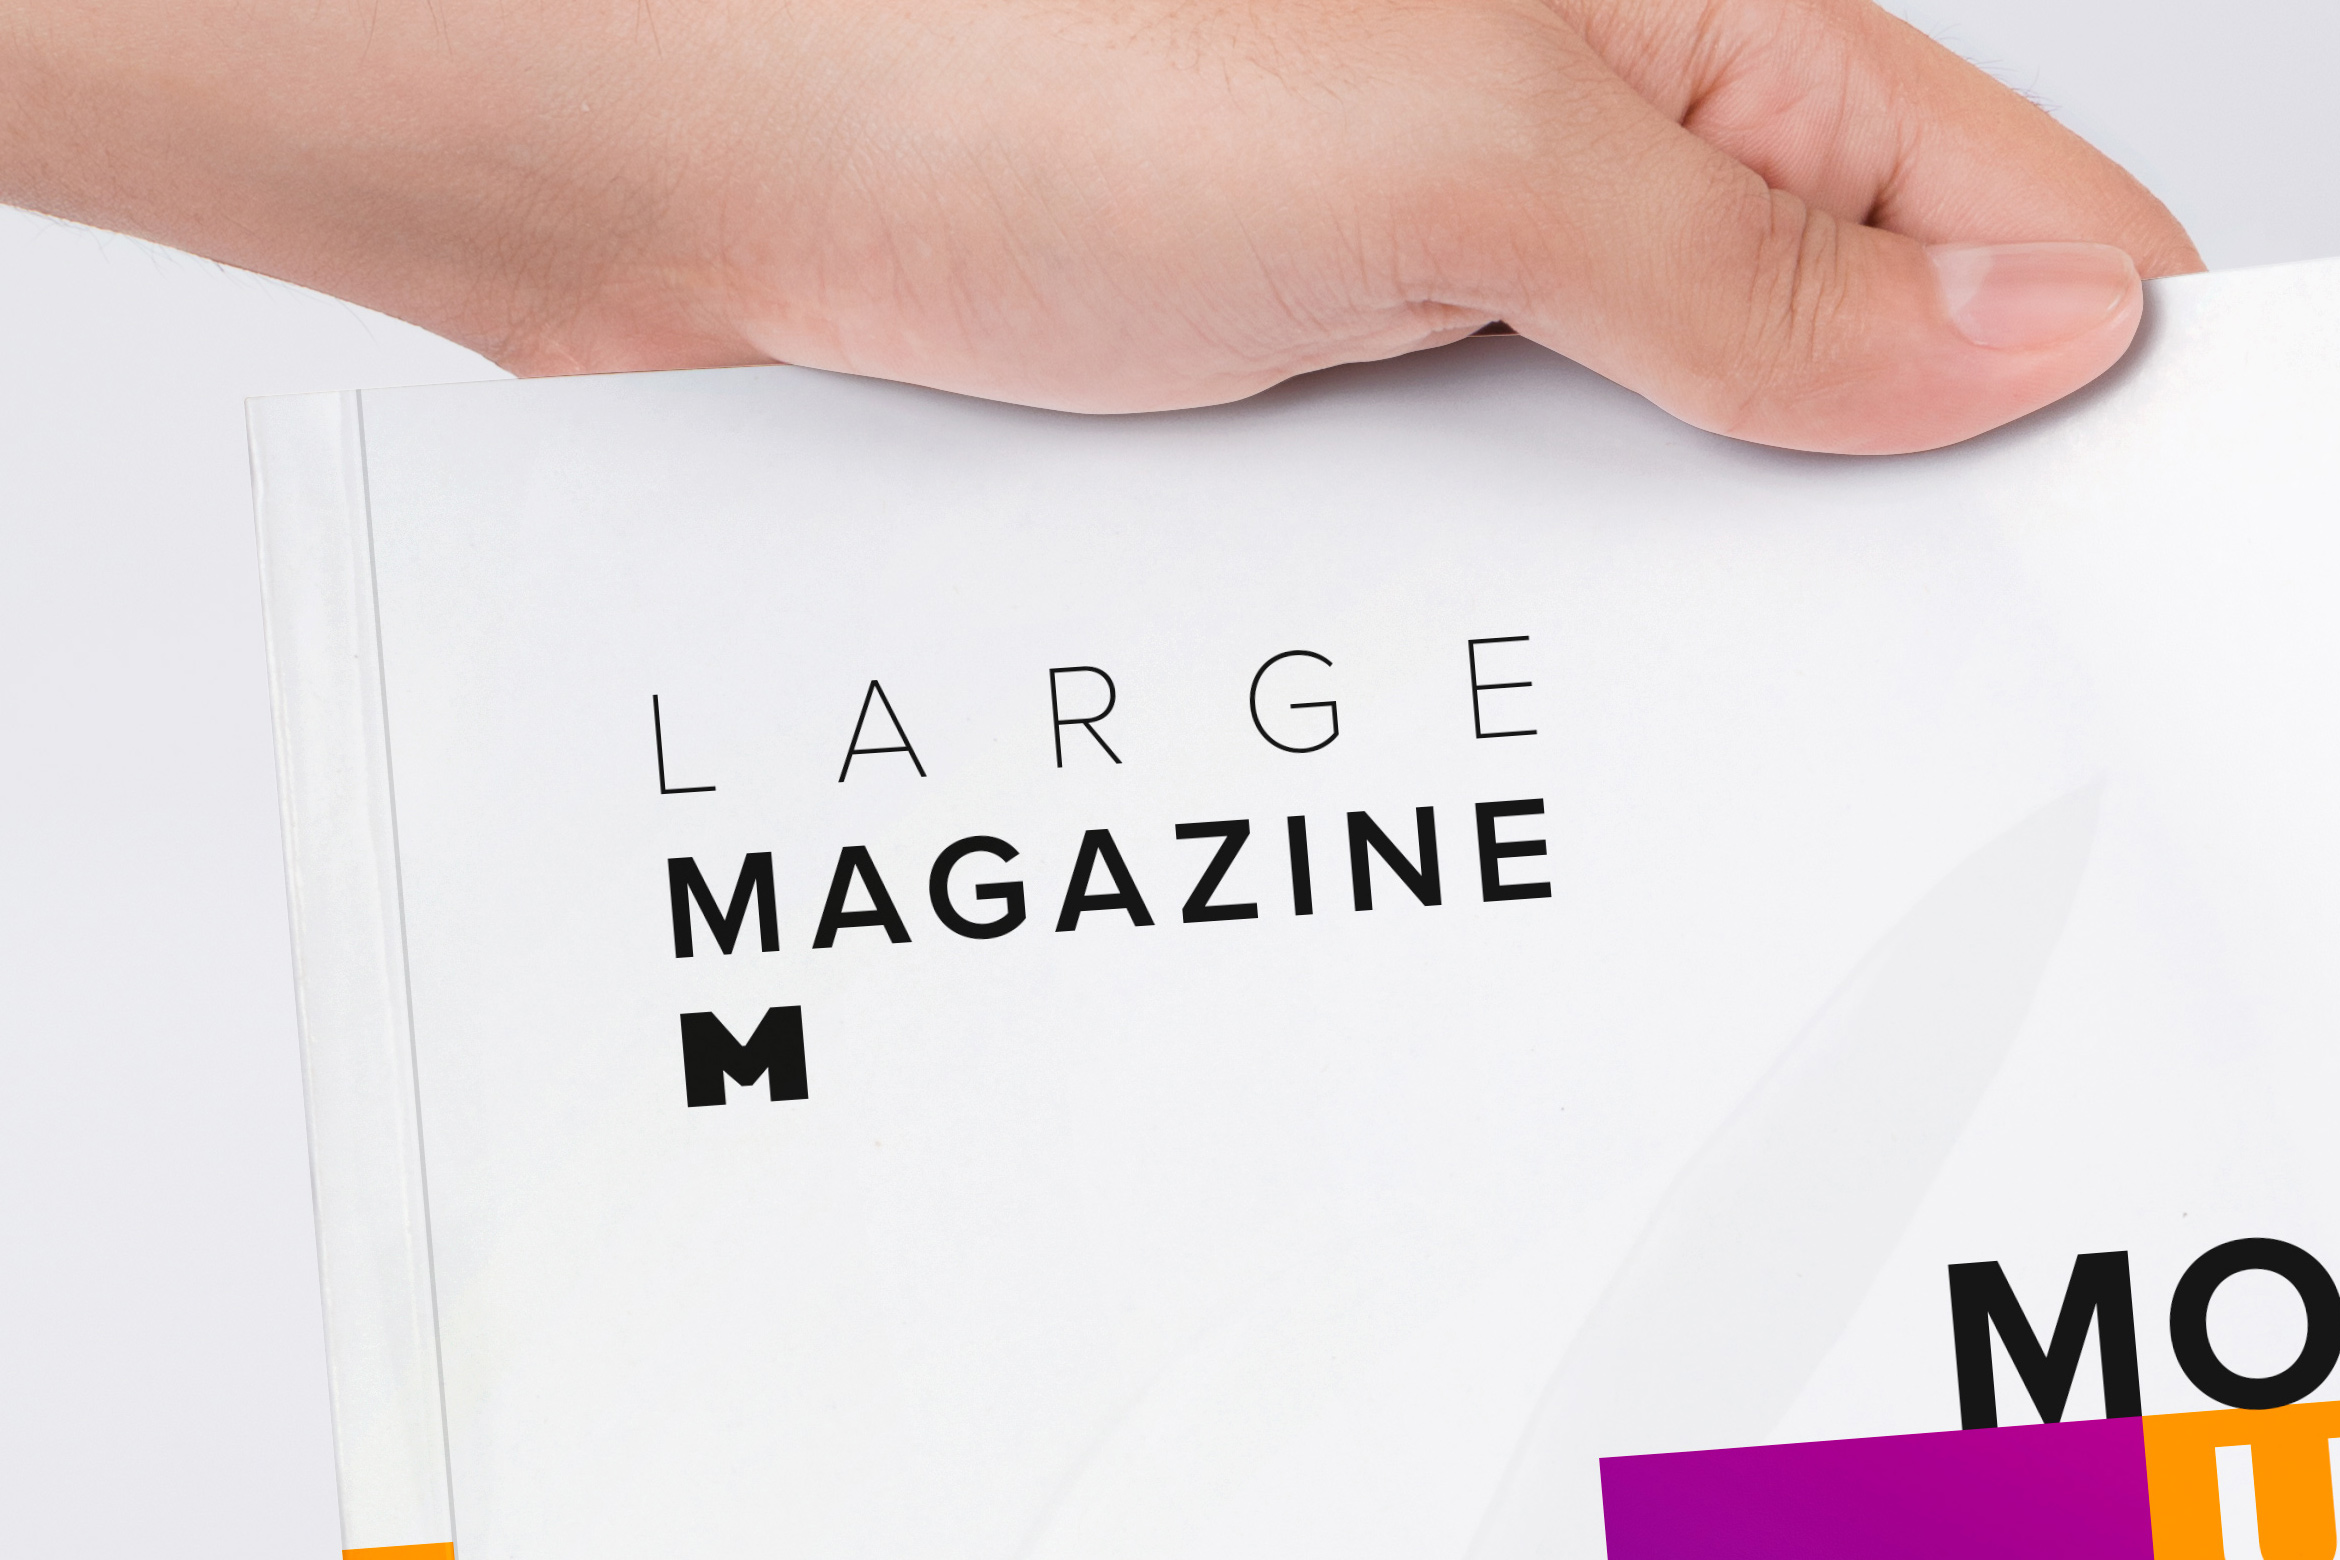 大型杂志封面设计效果图样机04 Large Magazine Cover Mockup 04插图(3)